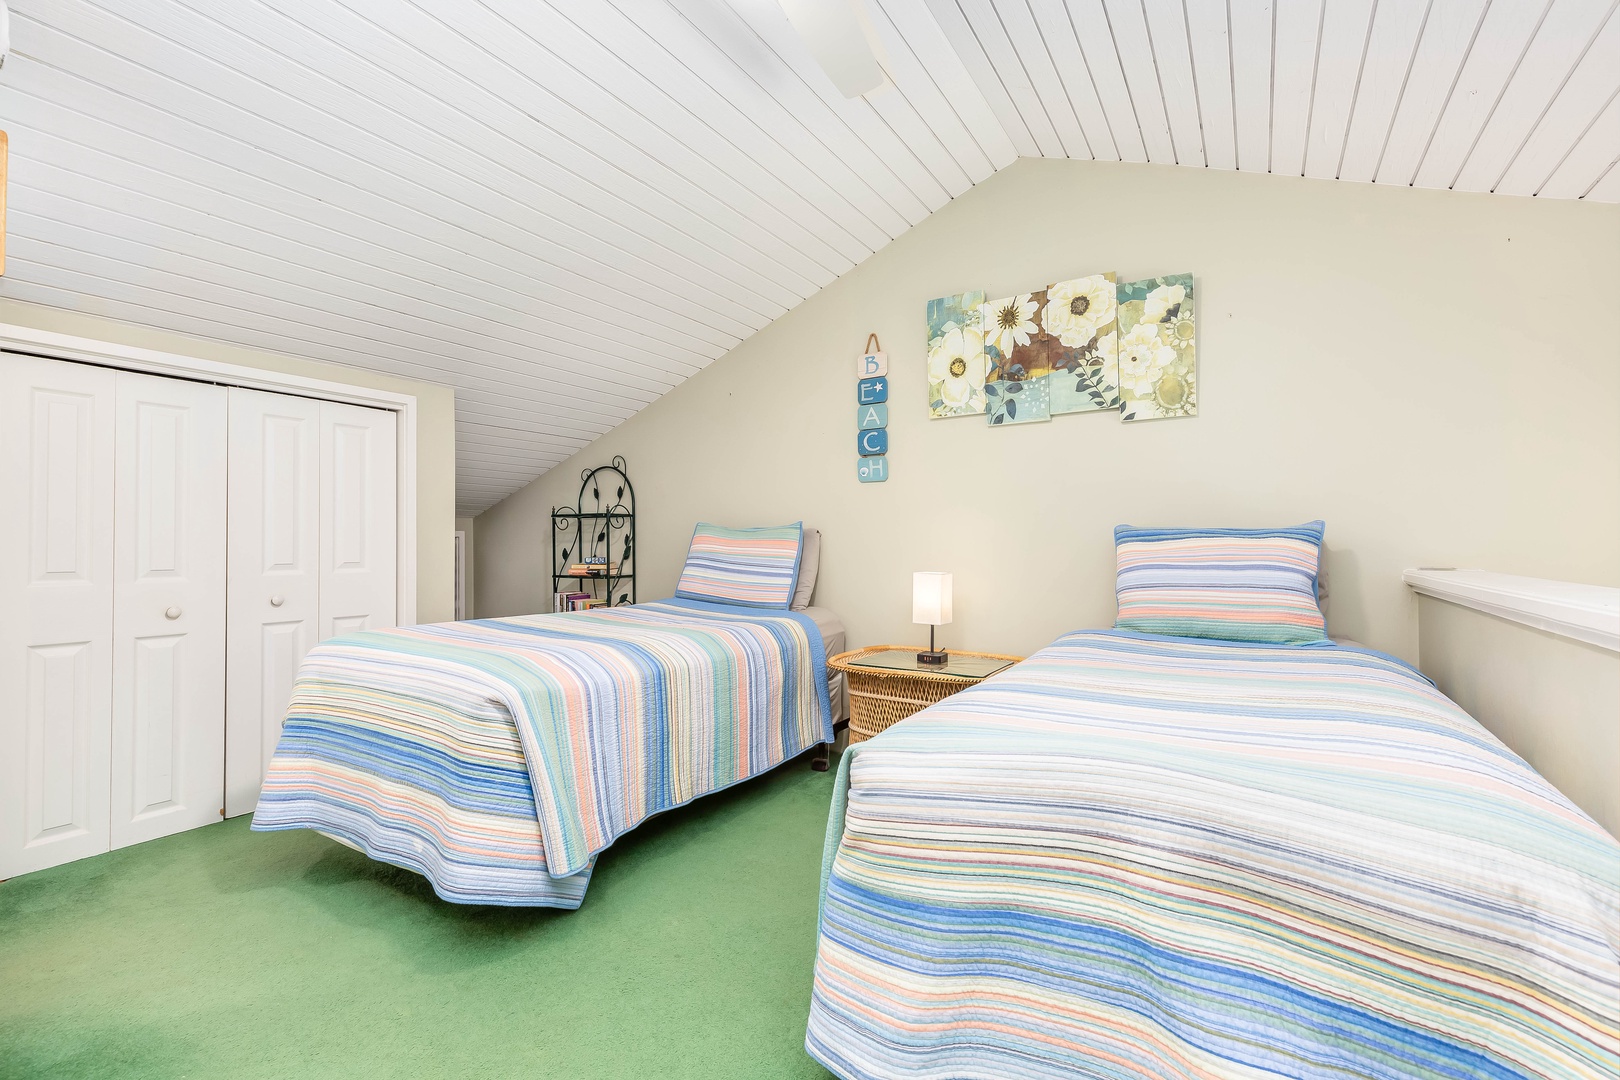 Kahuku Vacation Rentals, Ilima West Kuilima Estates #18 at Turtle Bay - Loft bedroom access to its ensuite bathroom.